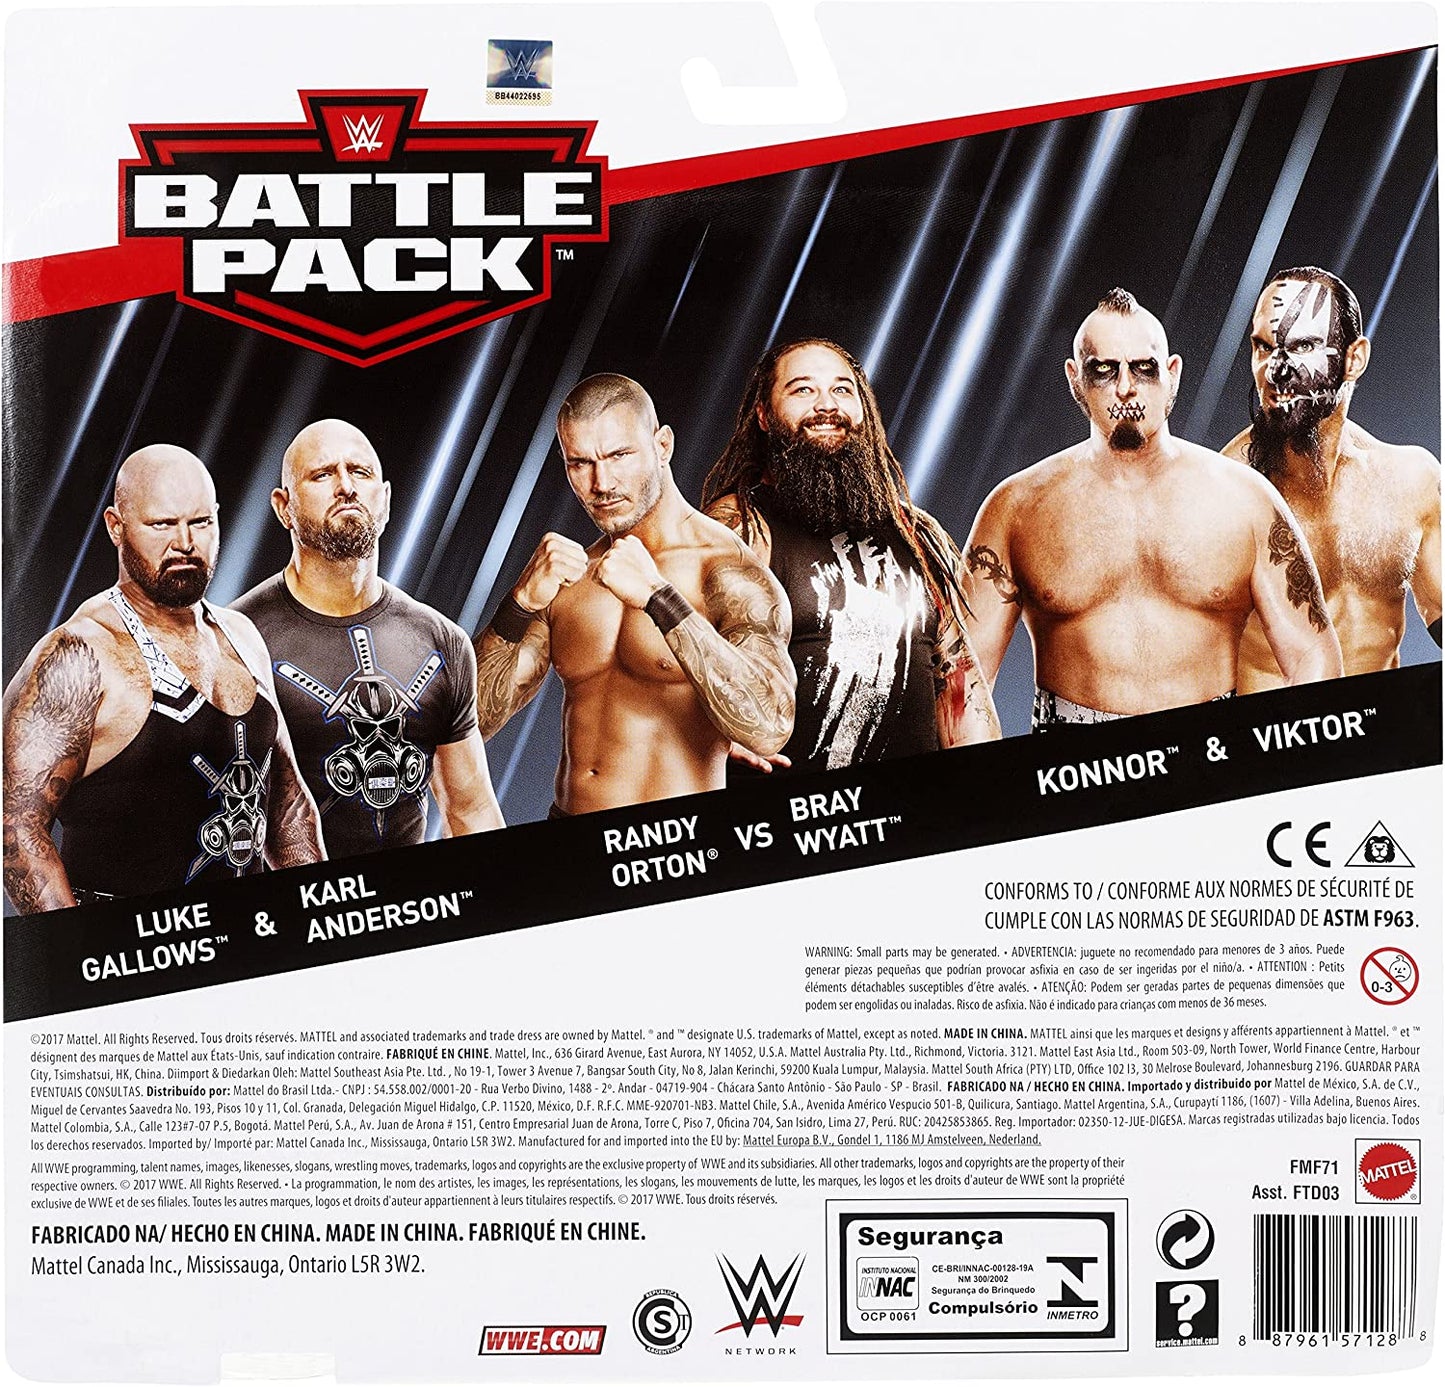 2017 WWE Mattel Basic Battle Packs Series 50 Luke Gallows & Karl Anderson